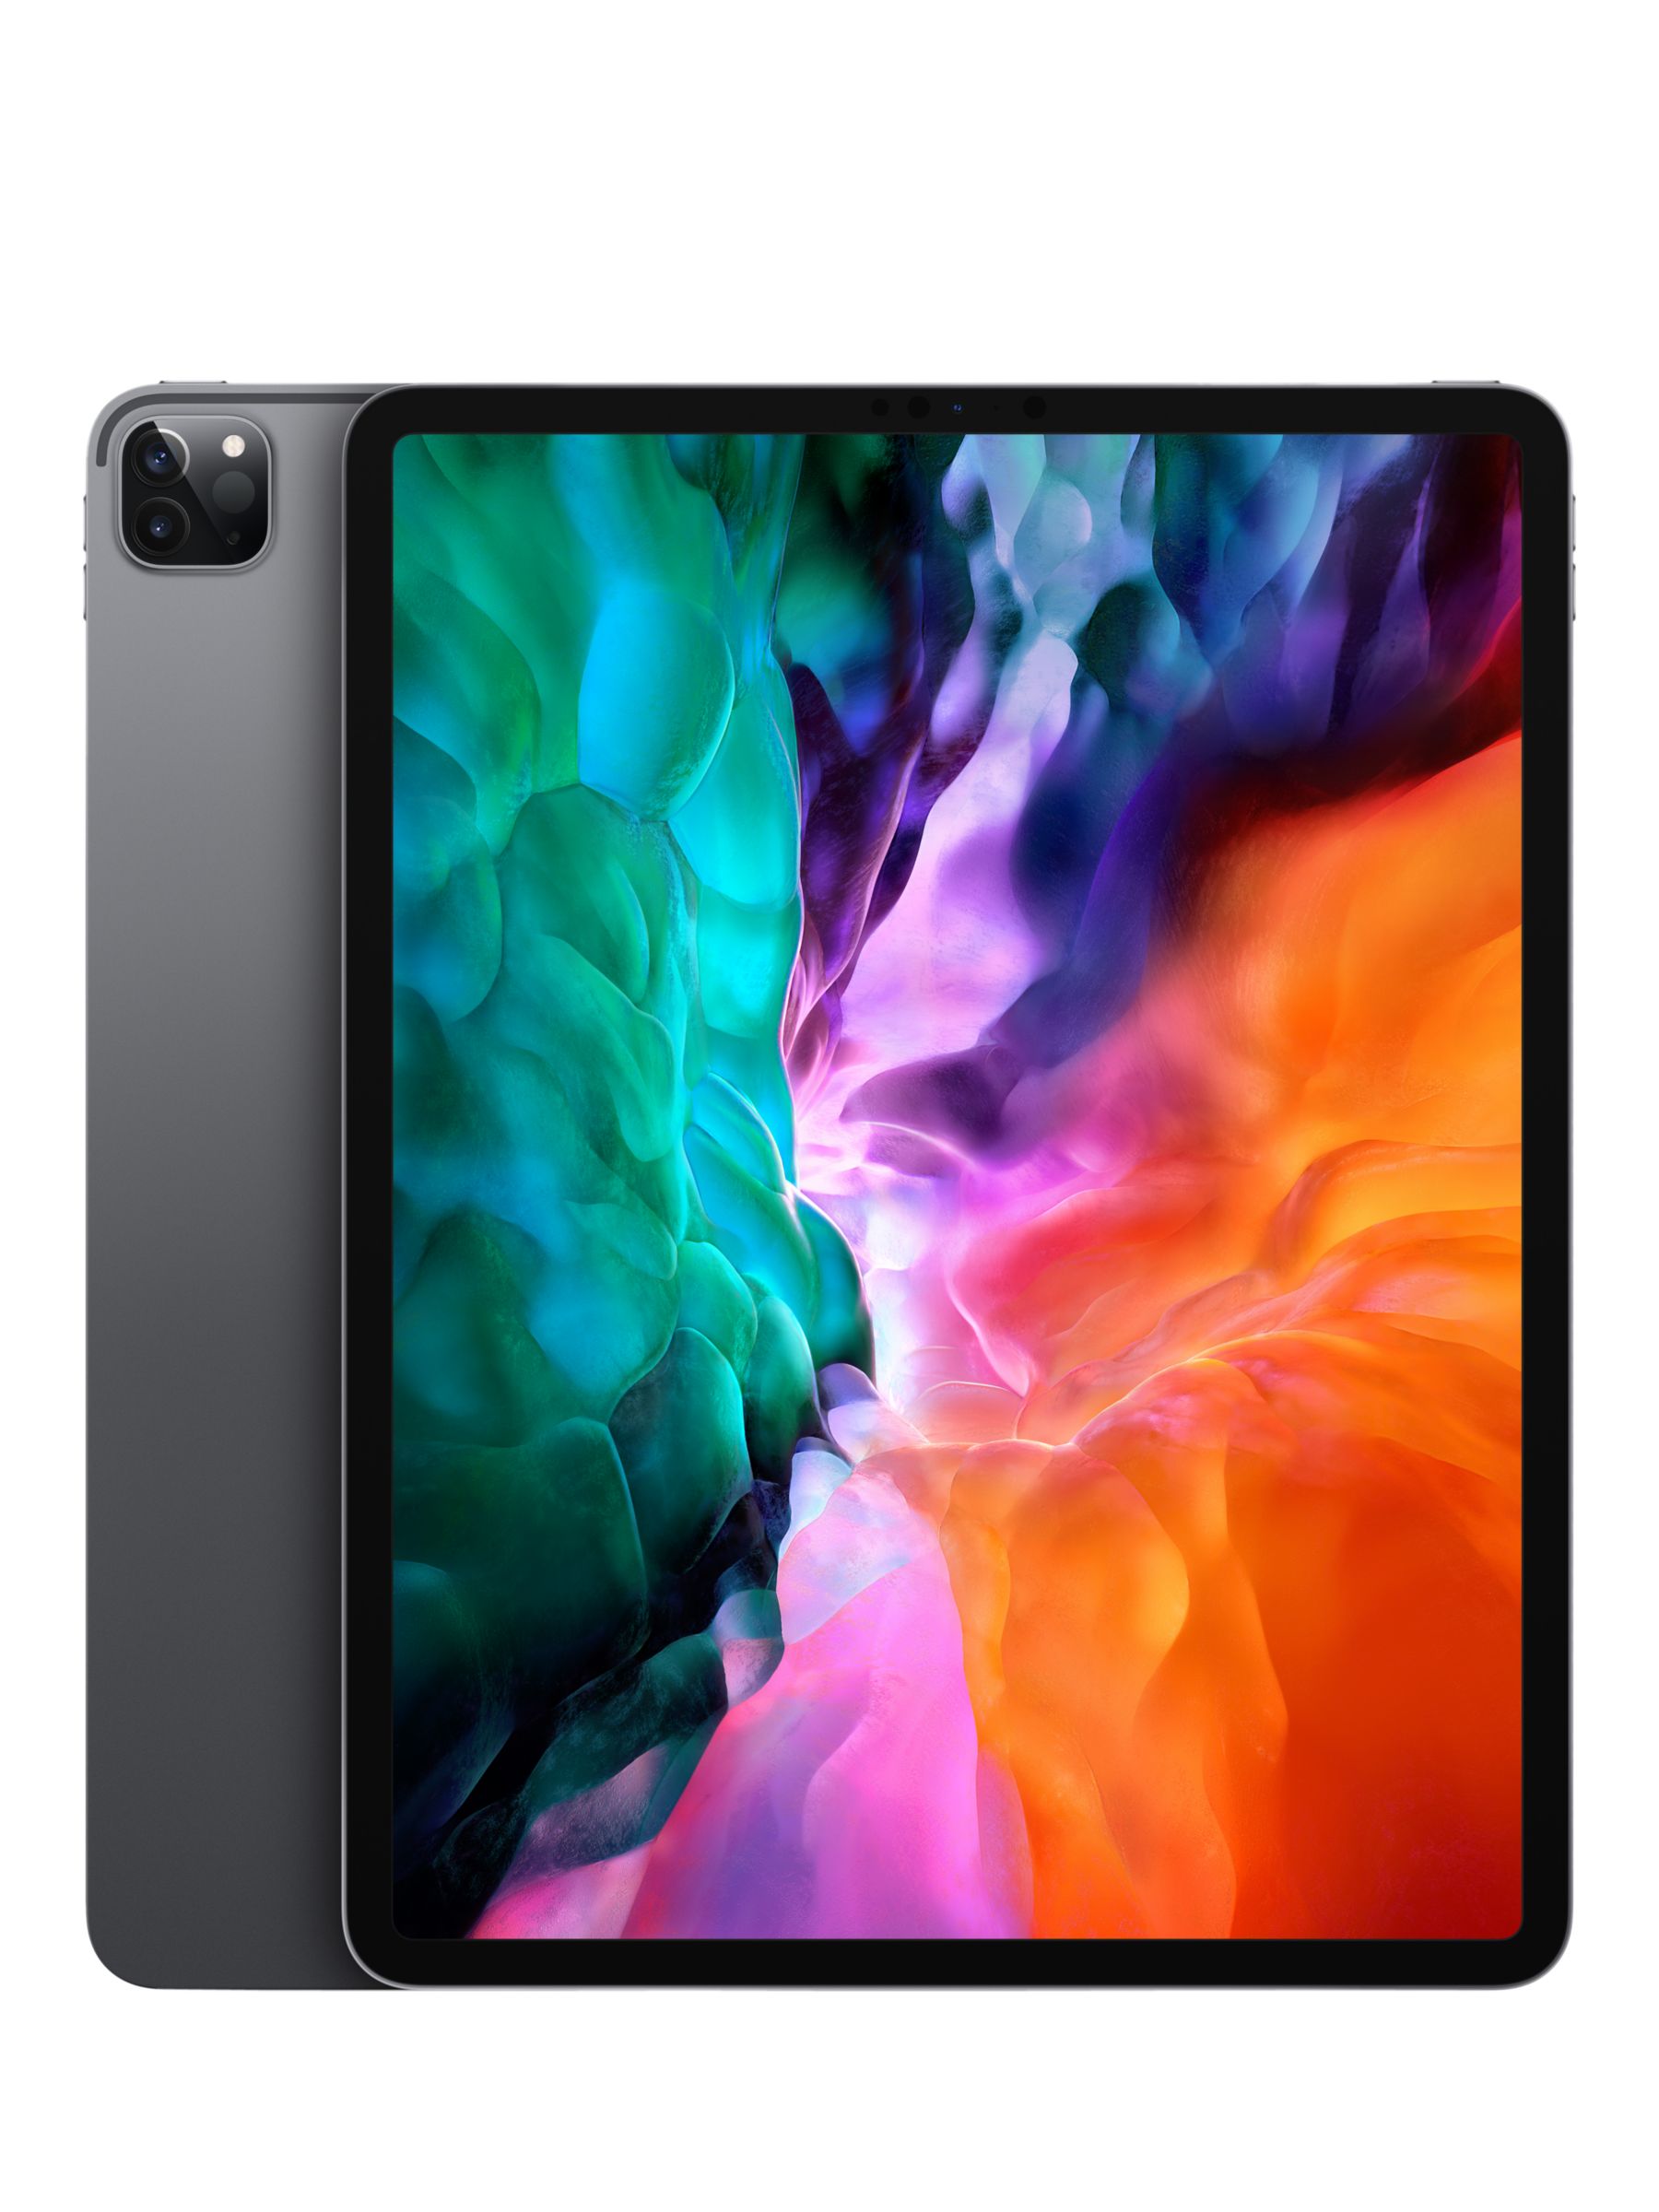 2020 Apple iPad Pro 12.9", A12Z Bionic, iOS, Wi-Fi, 128GB at John Lewis